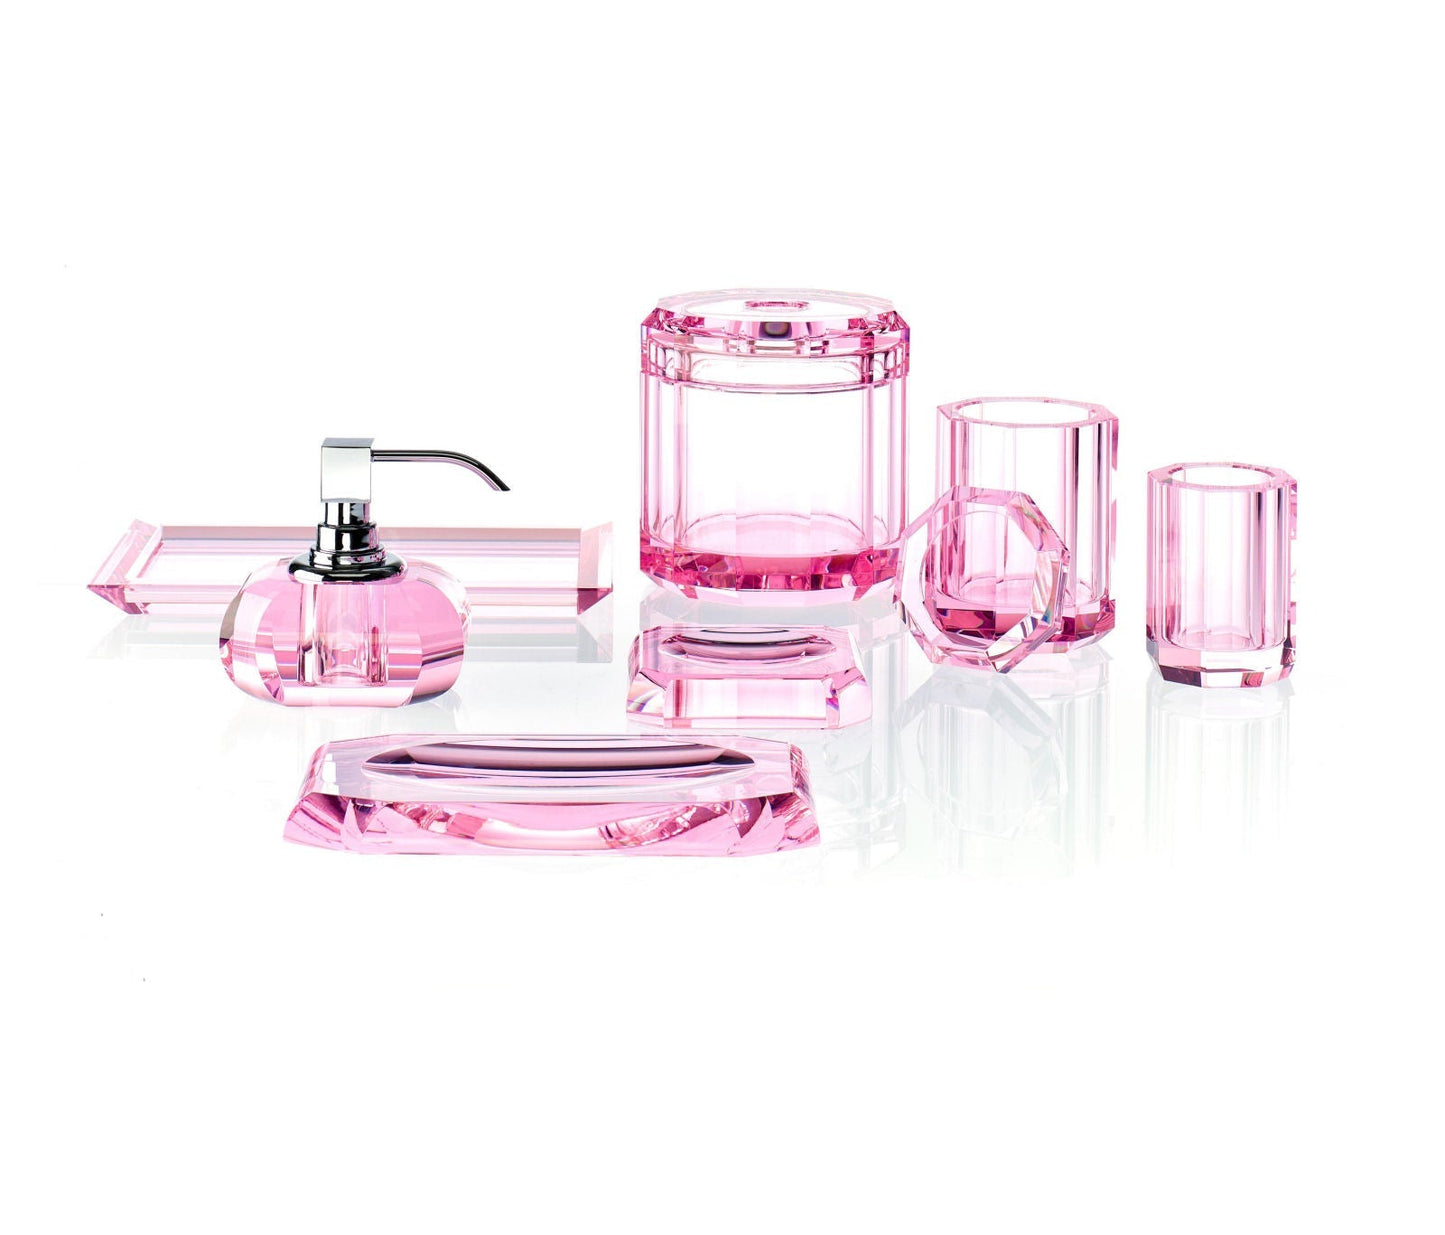 Luxury Shiny Gold Liquid Soap Glass Dispenser | Pink - |VESIMI Design| Luxury Bathrooms and Home Decor